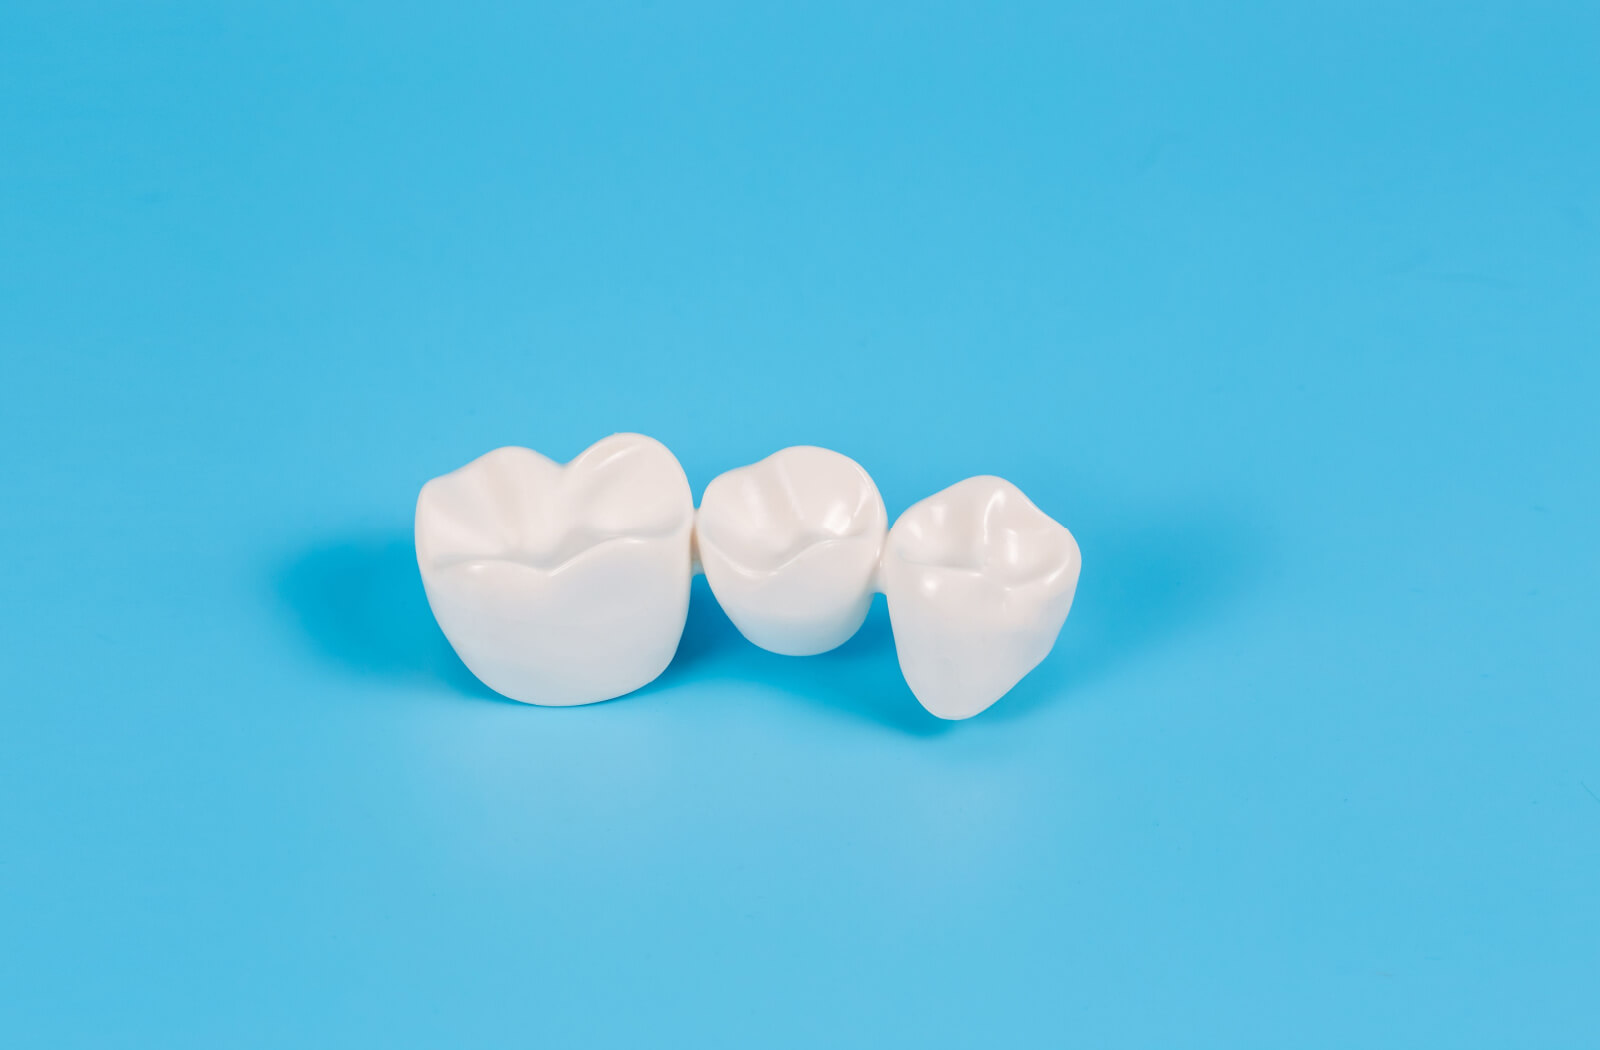 A set of dental crowns against a blue background.